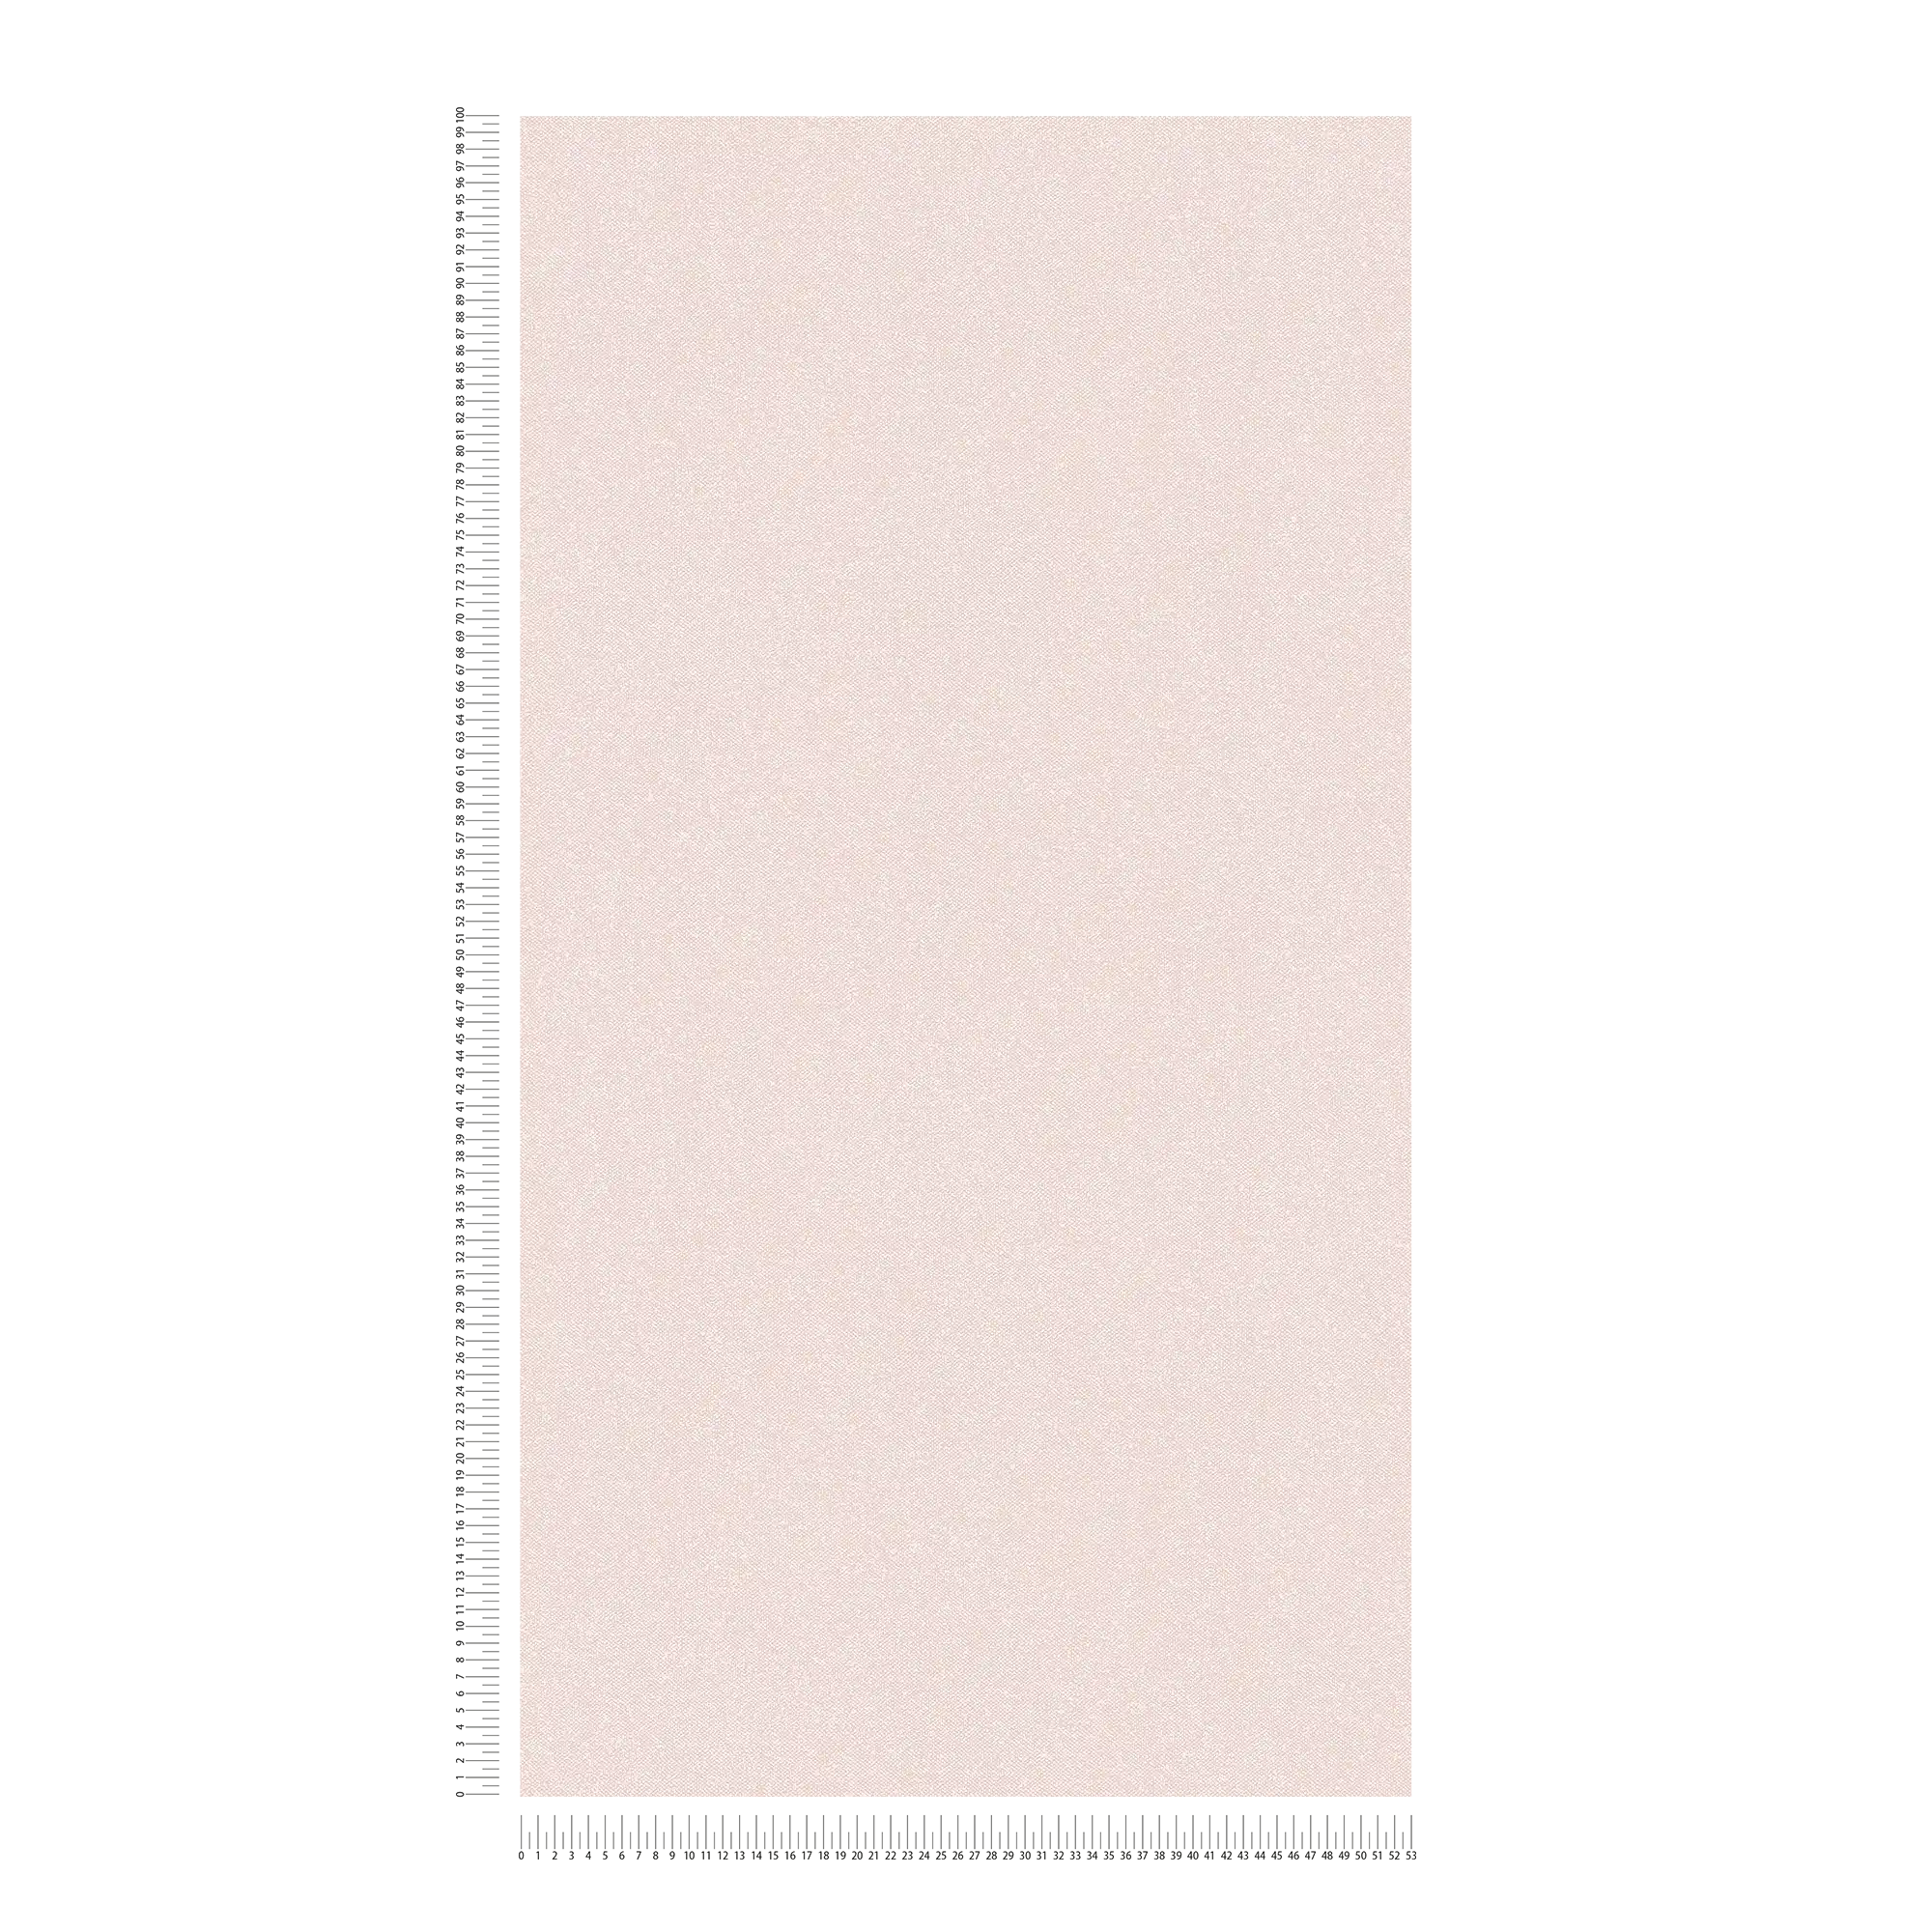             Carta da parati a tinta unita effetto tessuto - rosa, crema, bianco
        